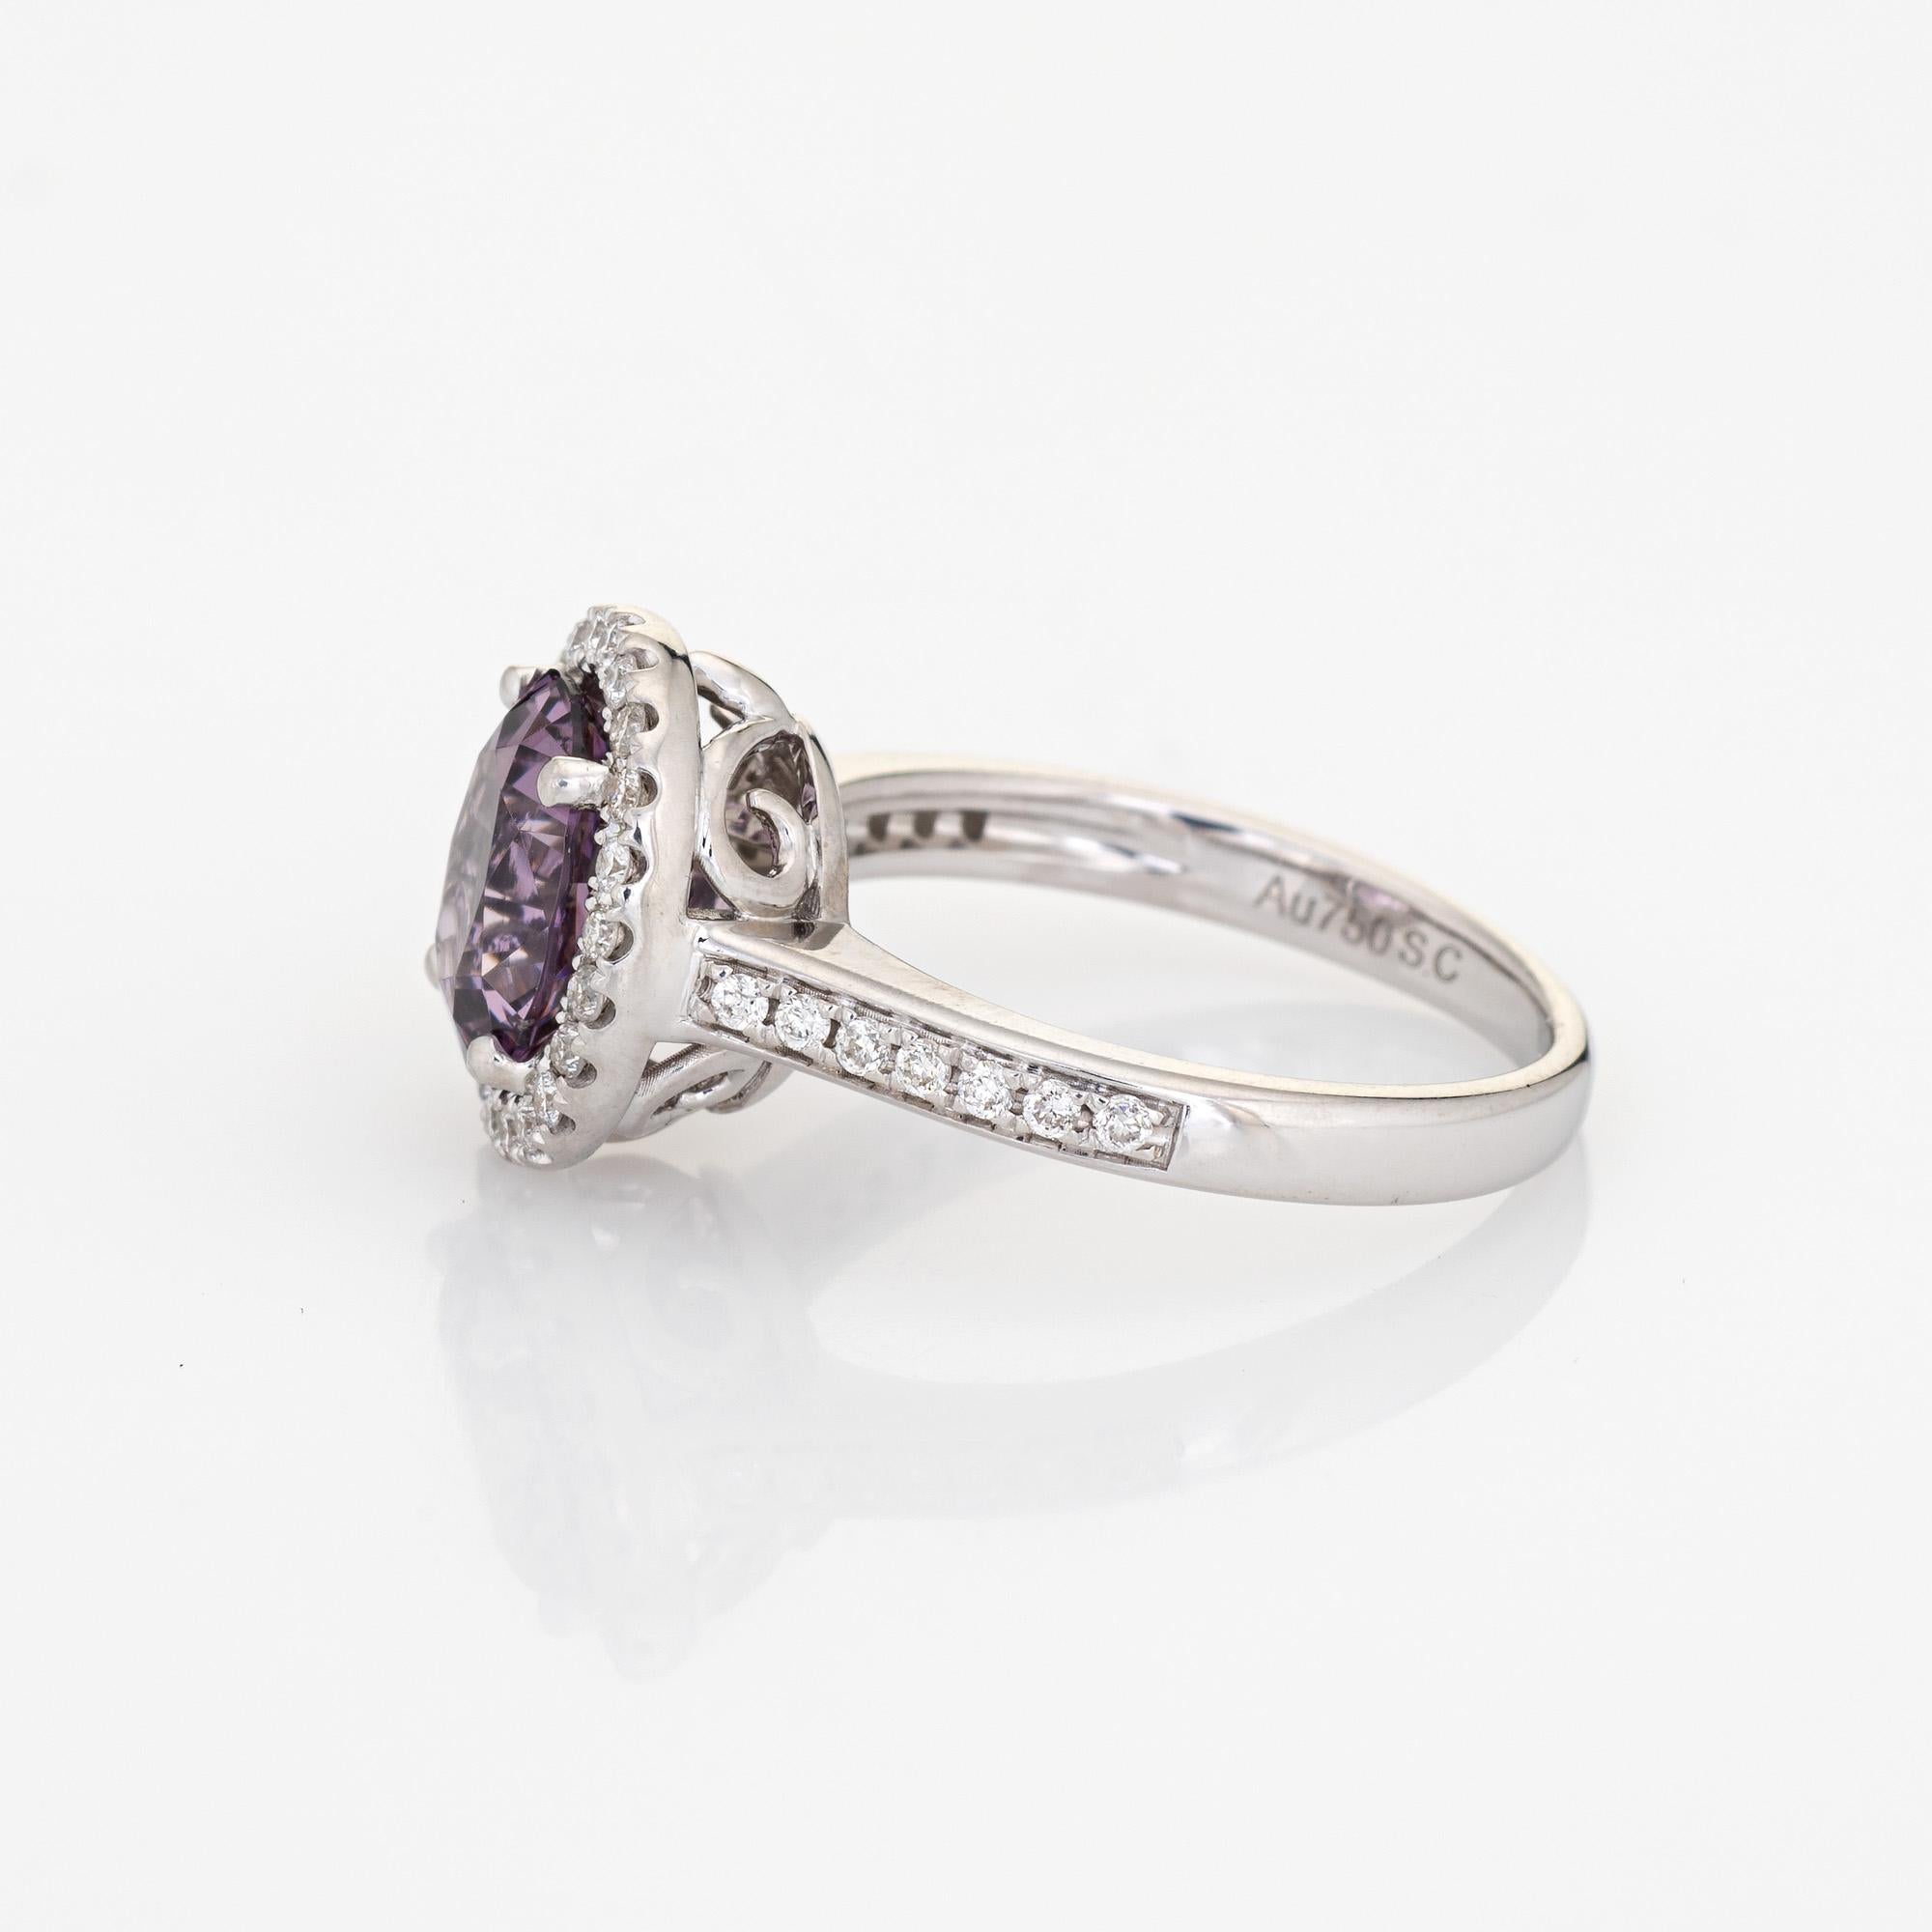 Oval Cut 1.90ct Purple Spinel Diamond Ring Gemstone Engagement Estate 18k White Gold